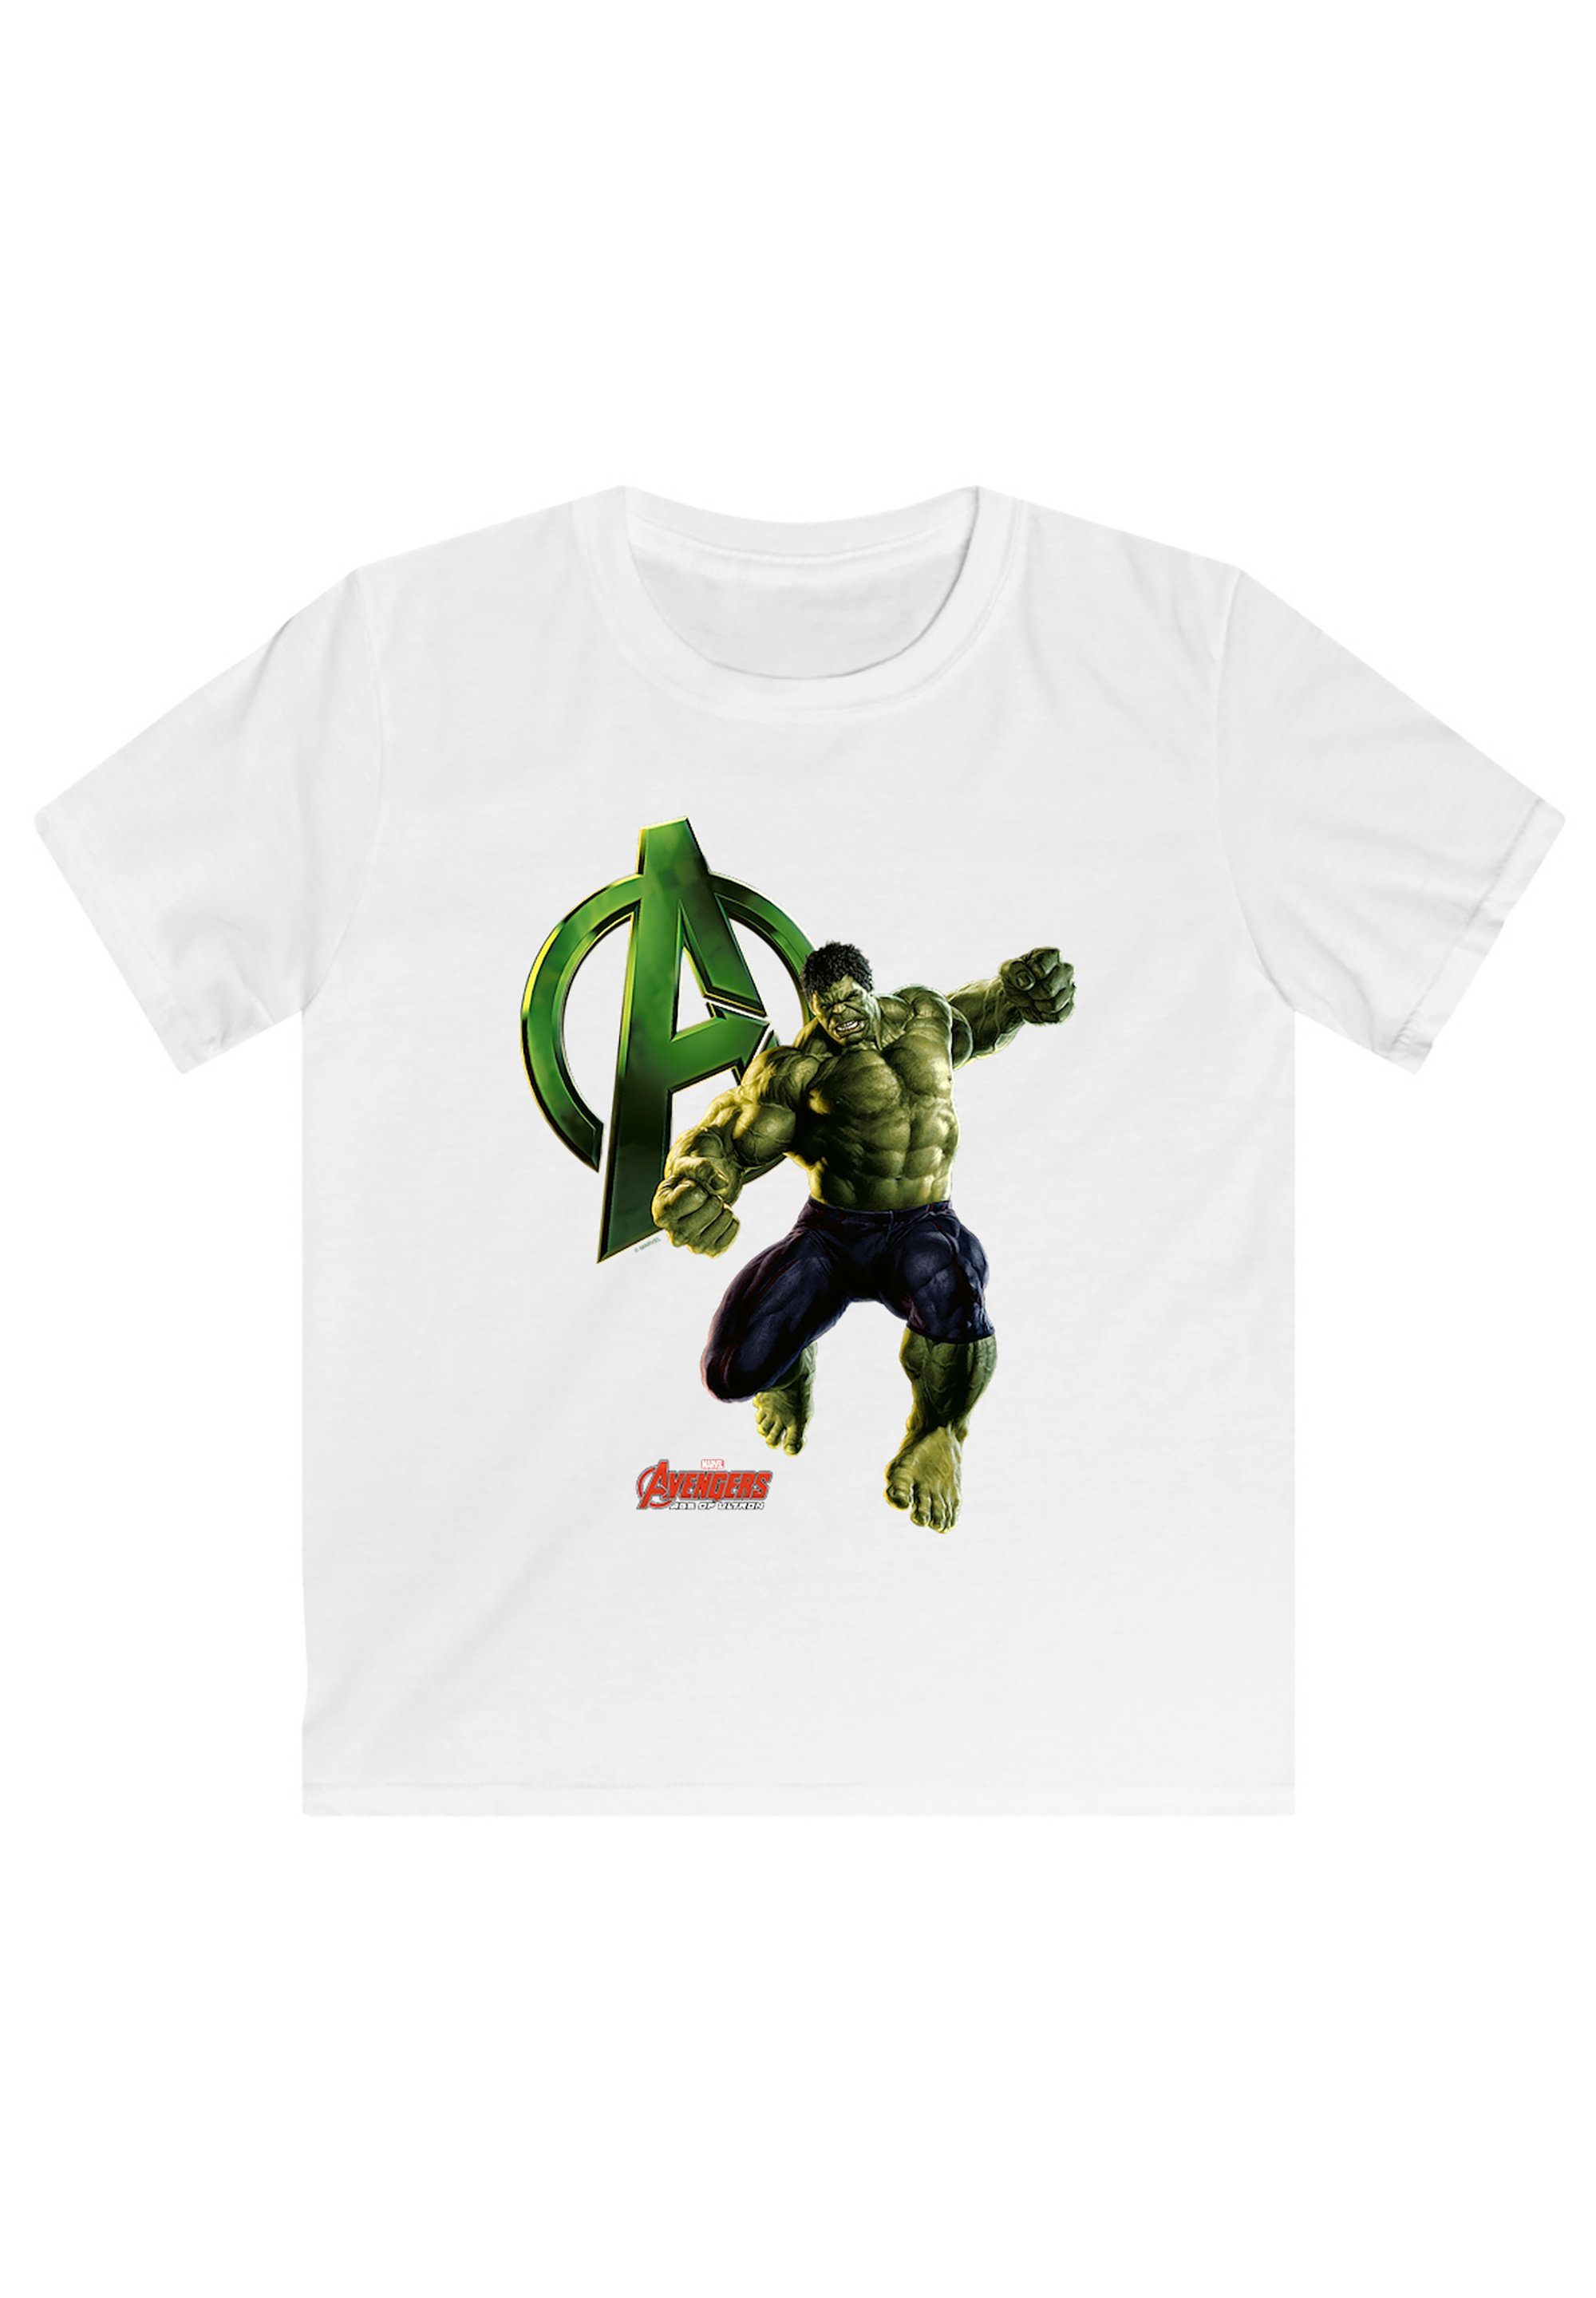 Hulk Ultron Marvel Age Avengers T-Shirt of Incredible F4NT4STIC Print